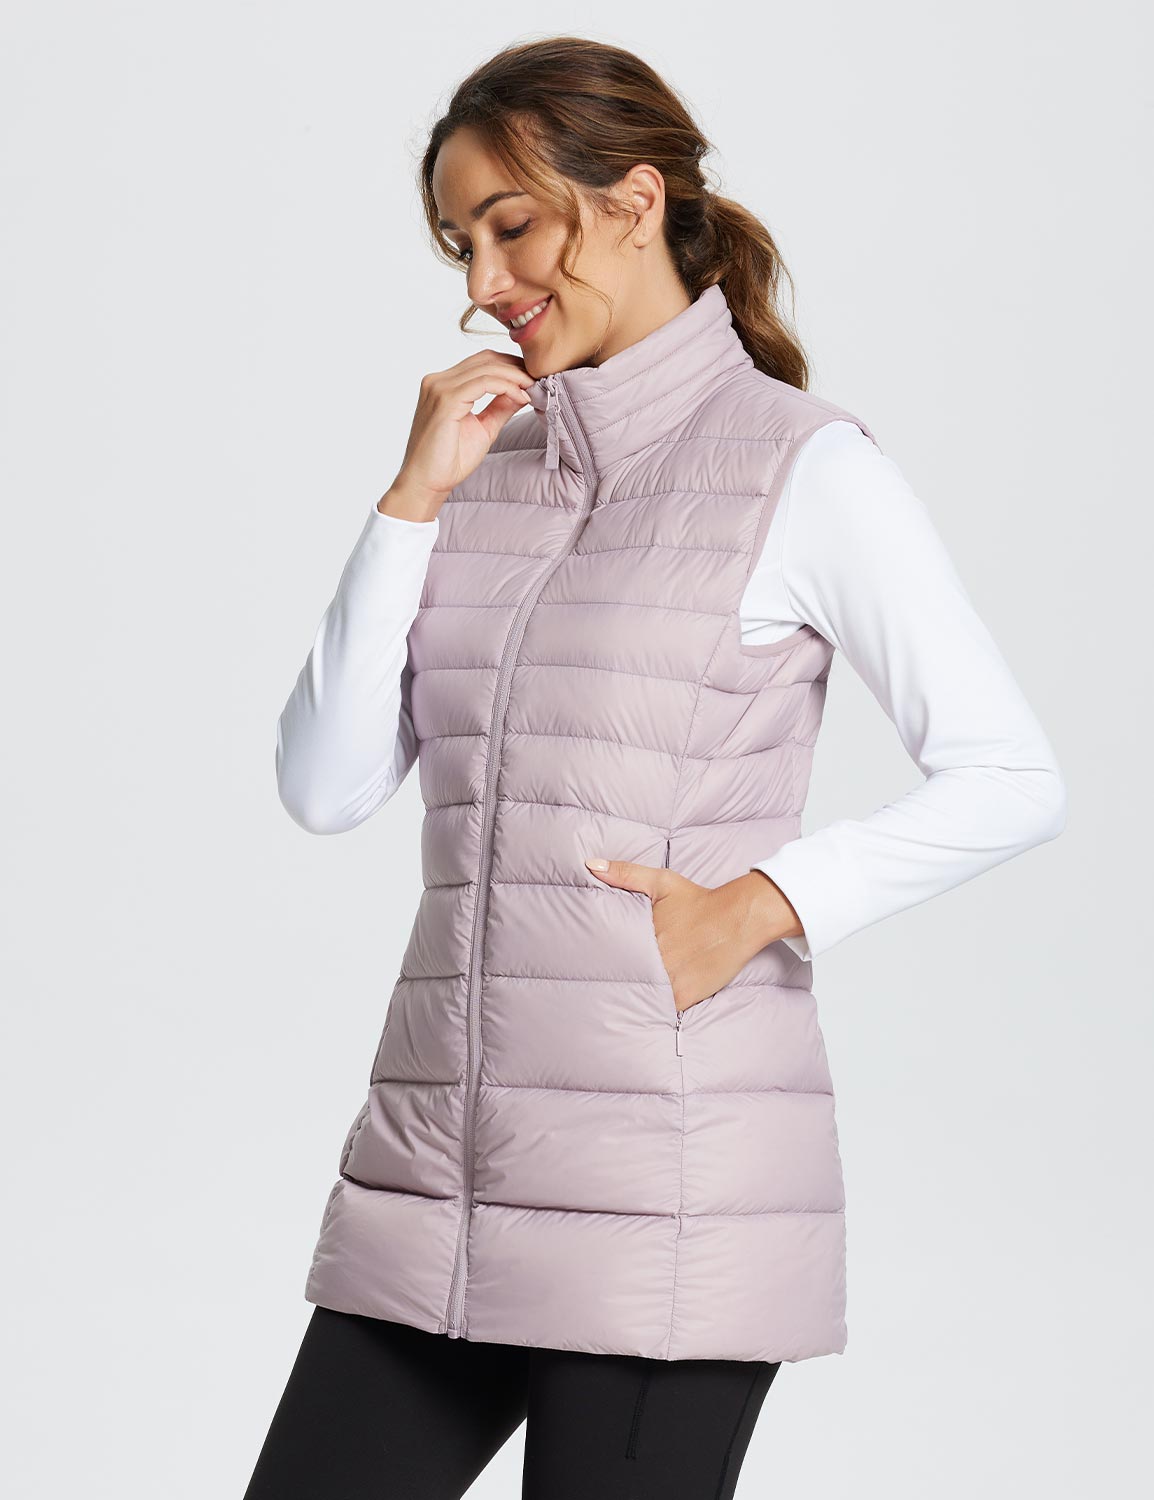 Baleaf Women's Water-Resistant Puffer Sleeveless Jacket dga070 Light Purple Side